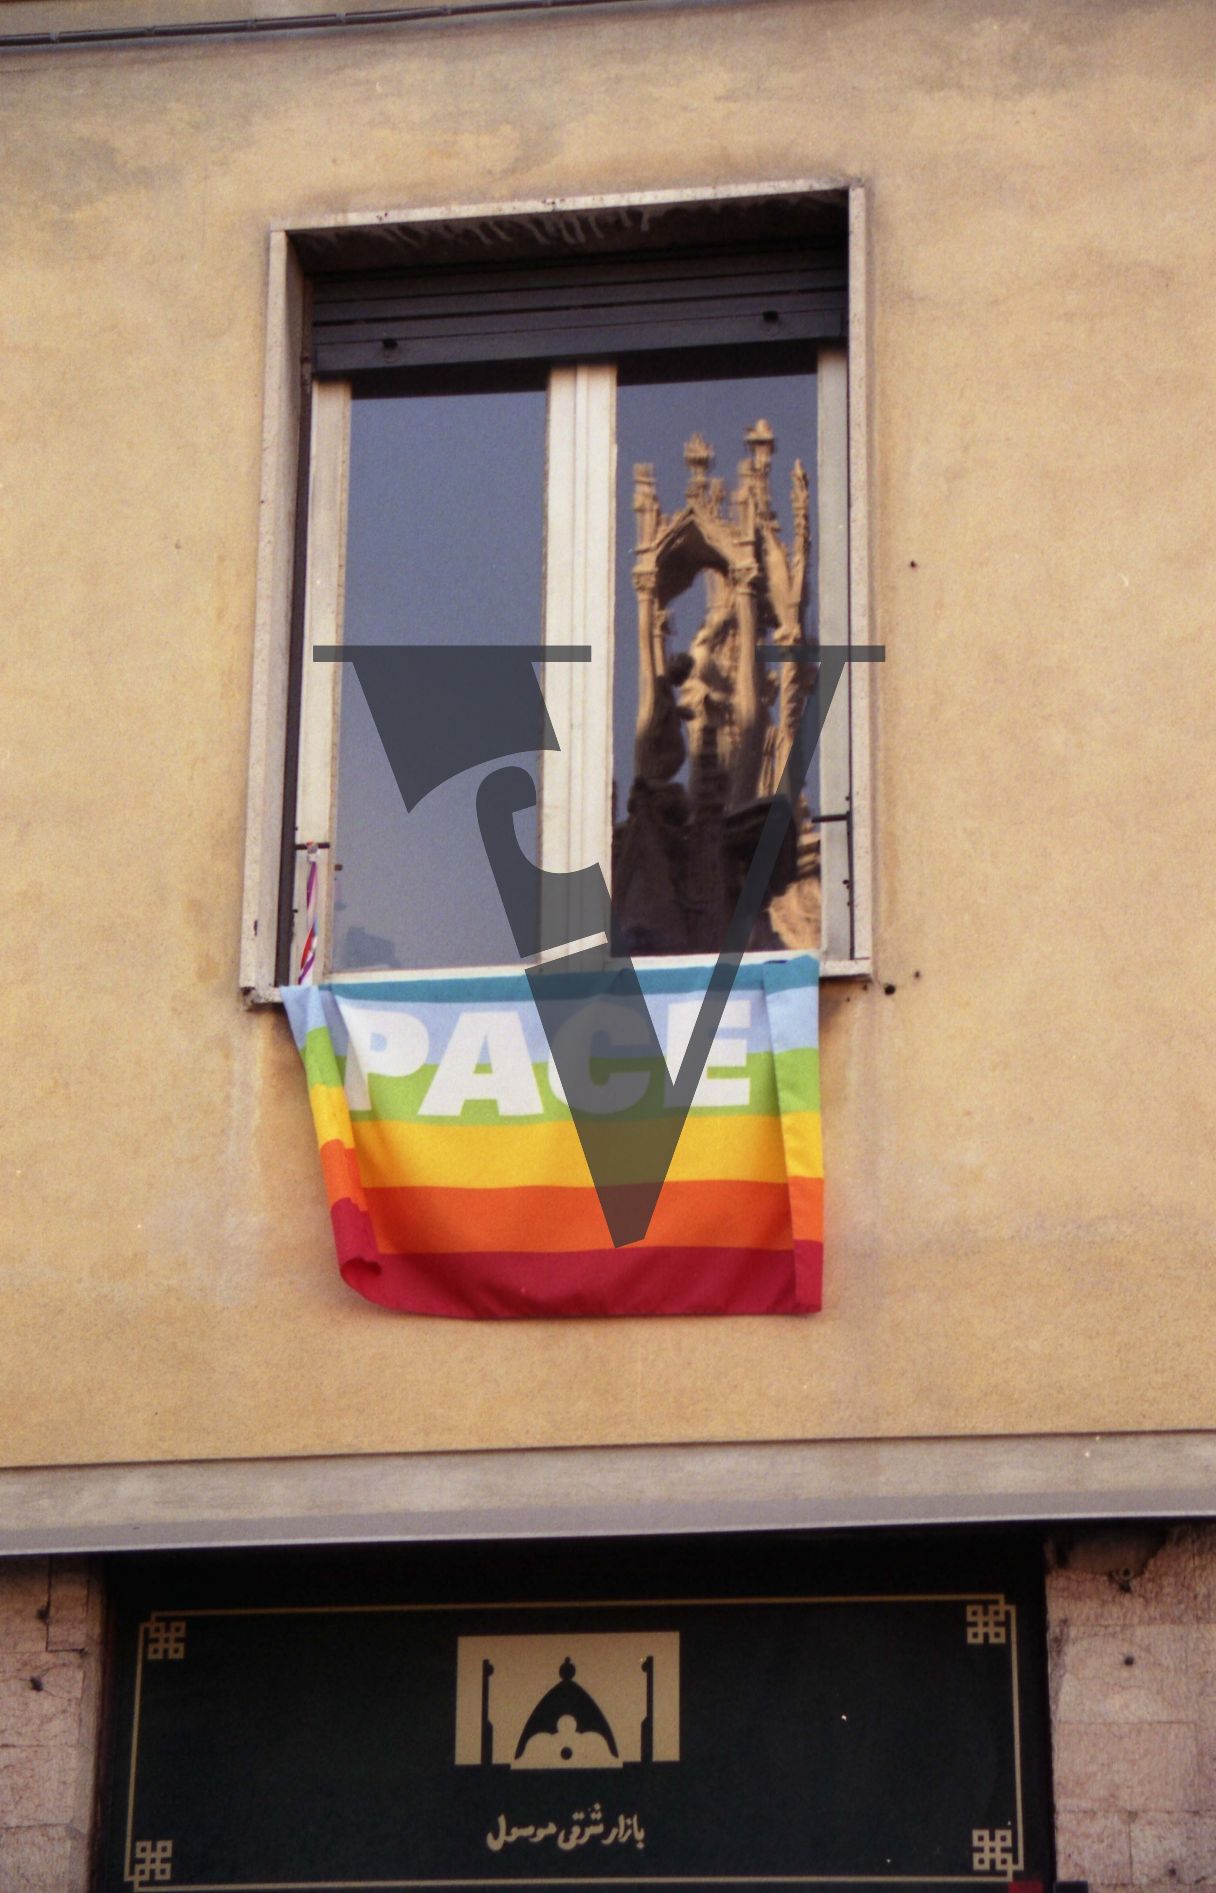 Italy, Bandiera per la Pace, Pisa, flag, reflections.